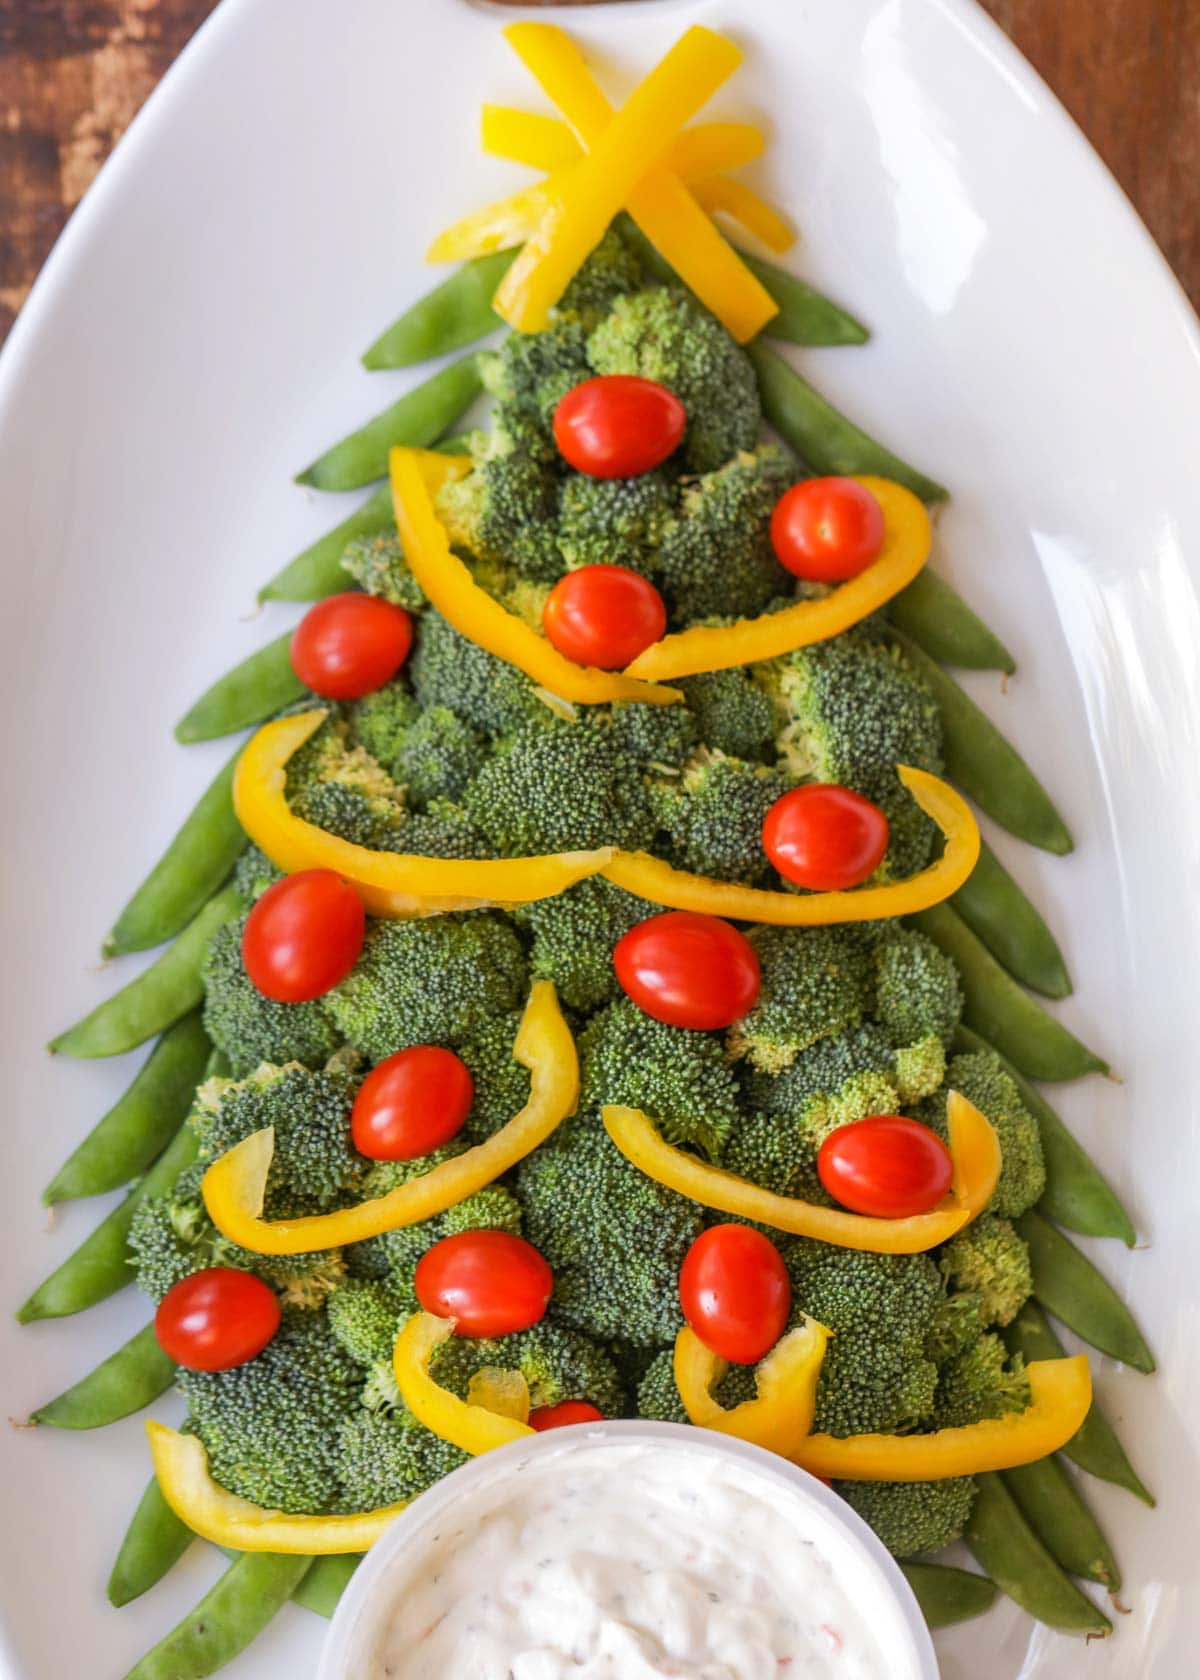 Christmas tree veggie platter served with dip